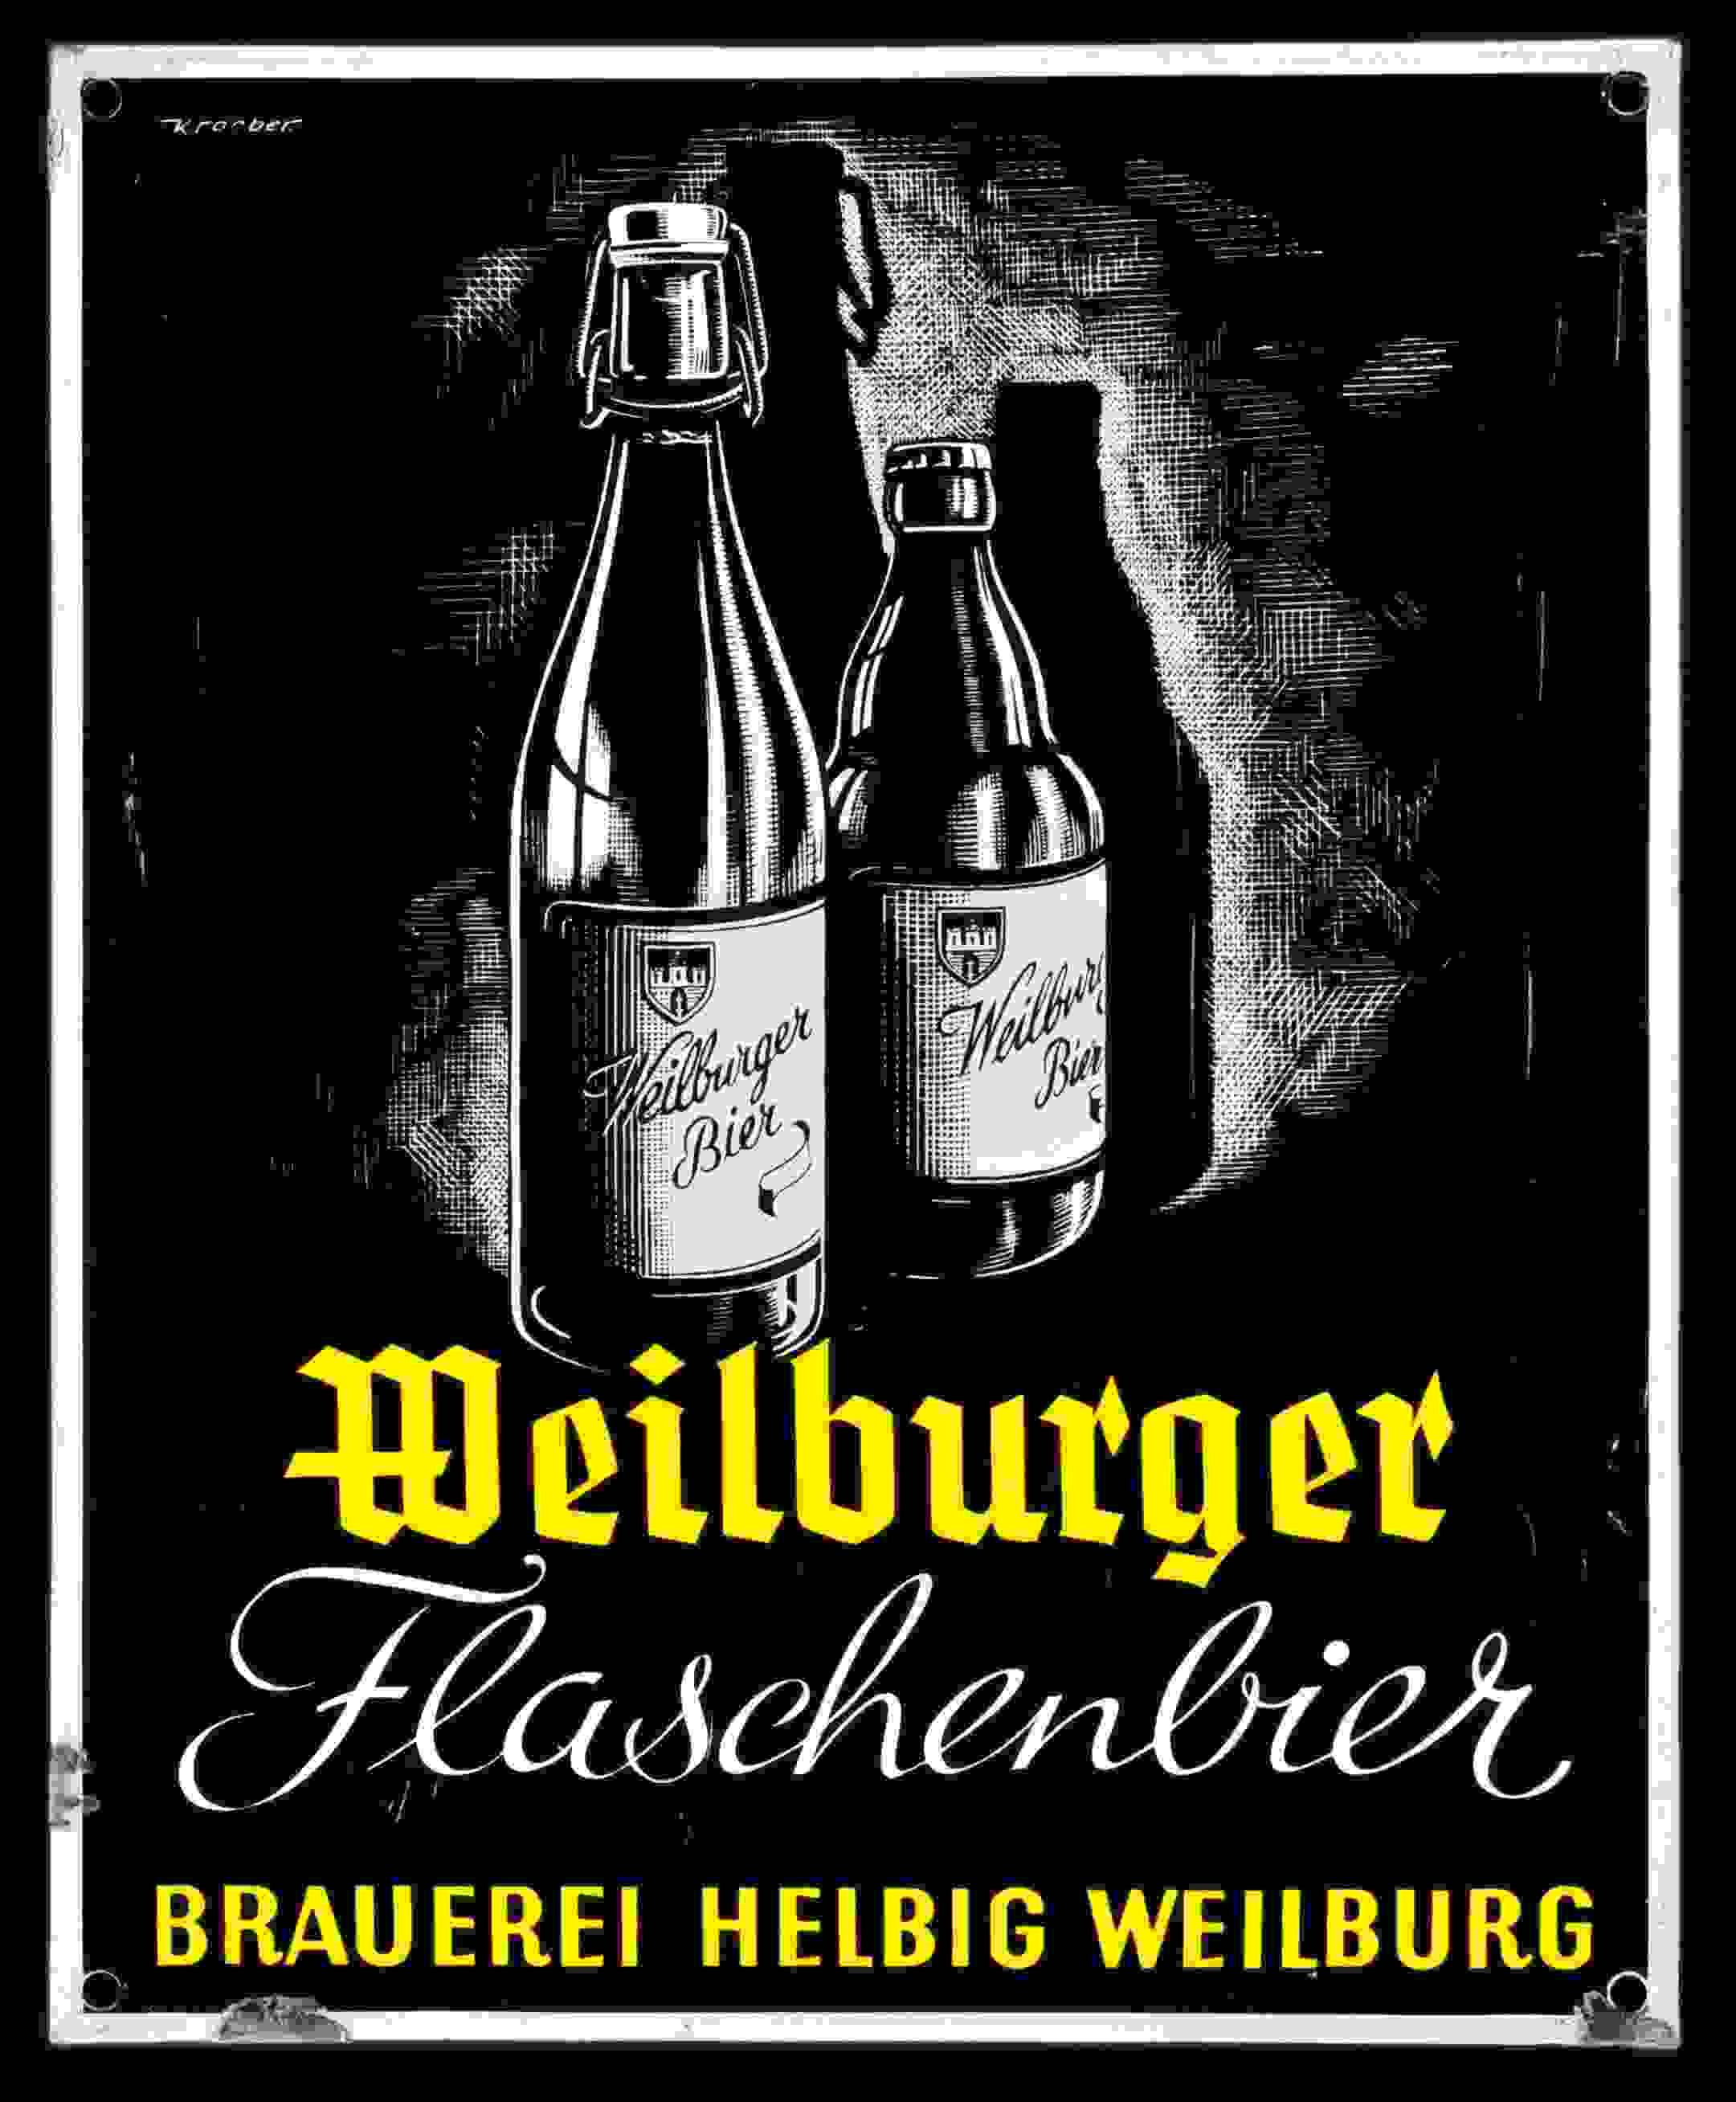 Weilburger Flaschenbier 